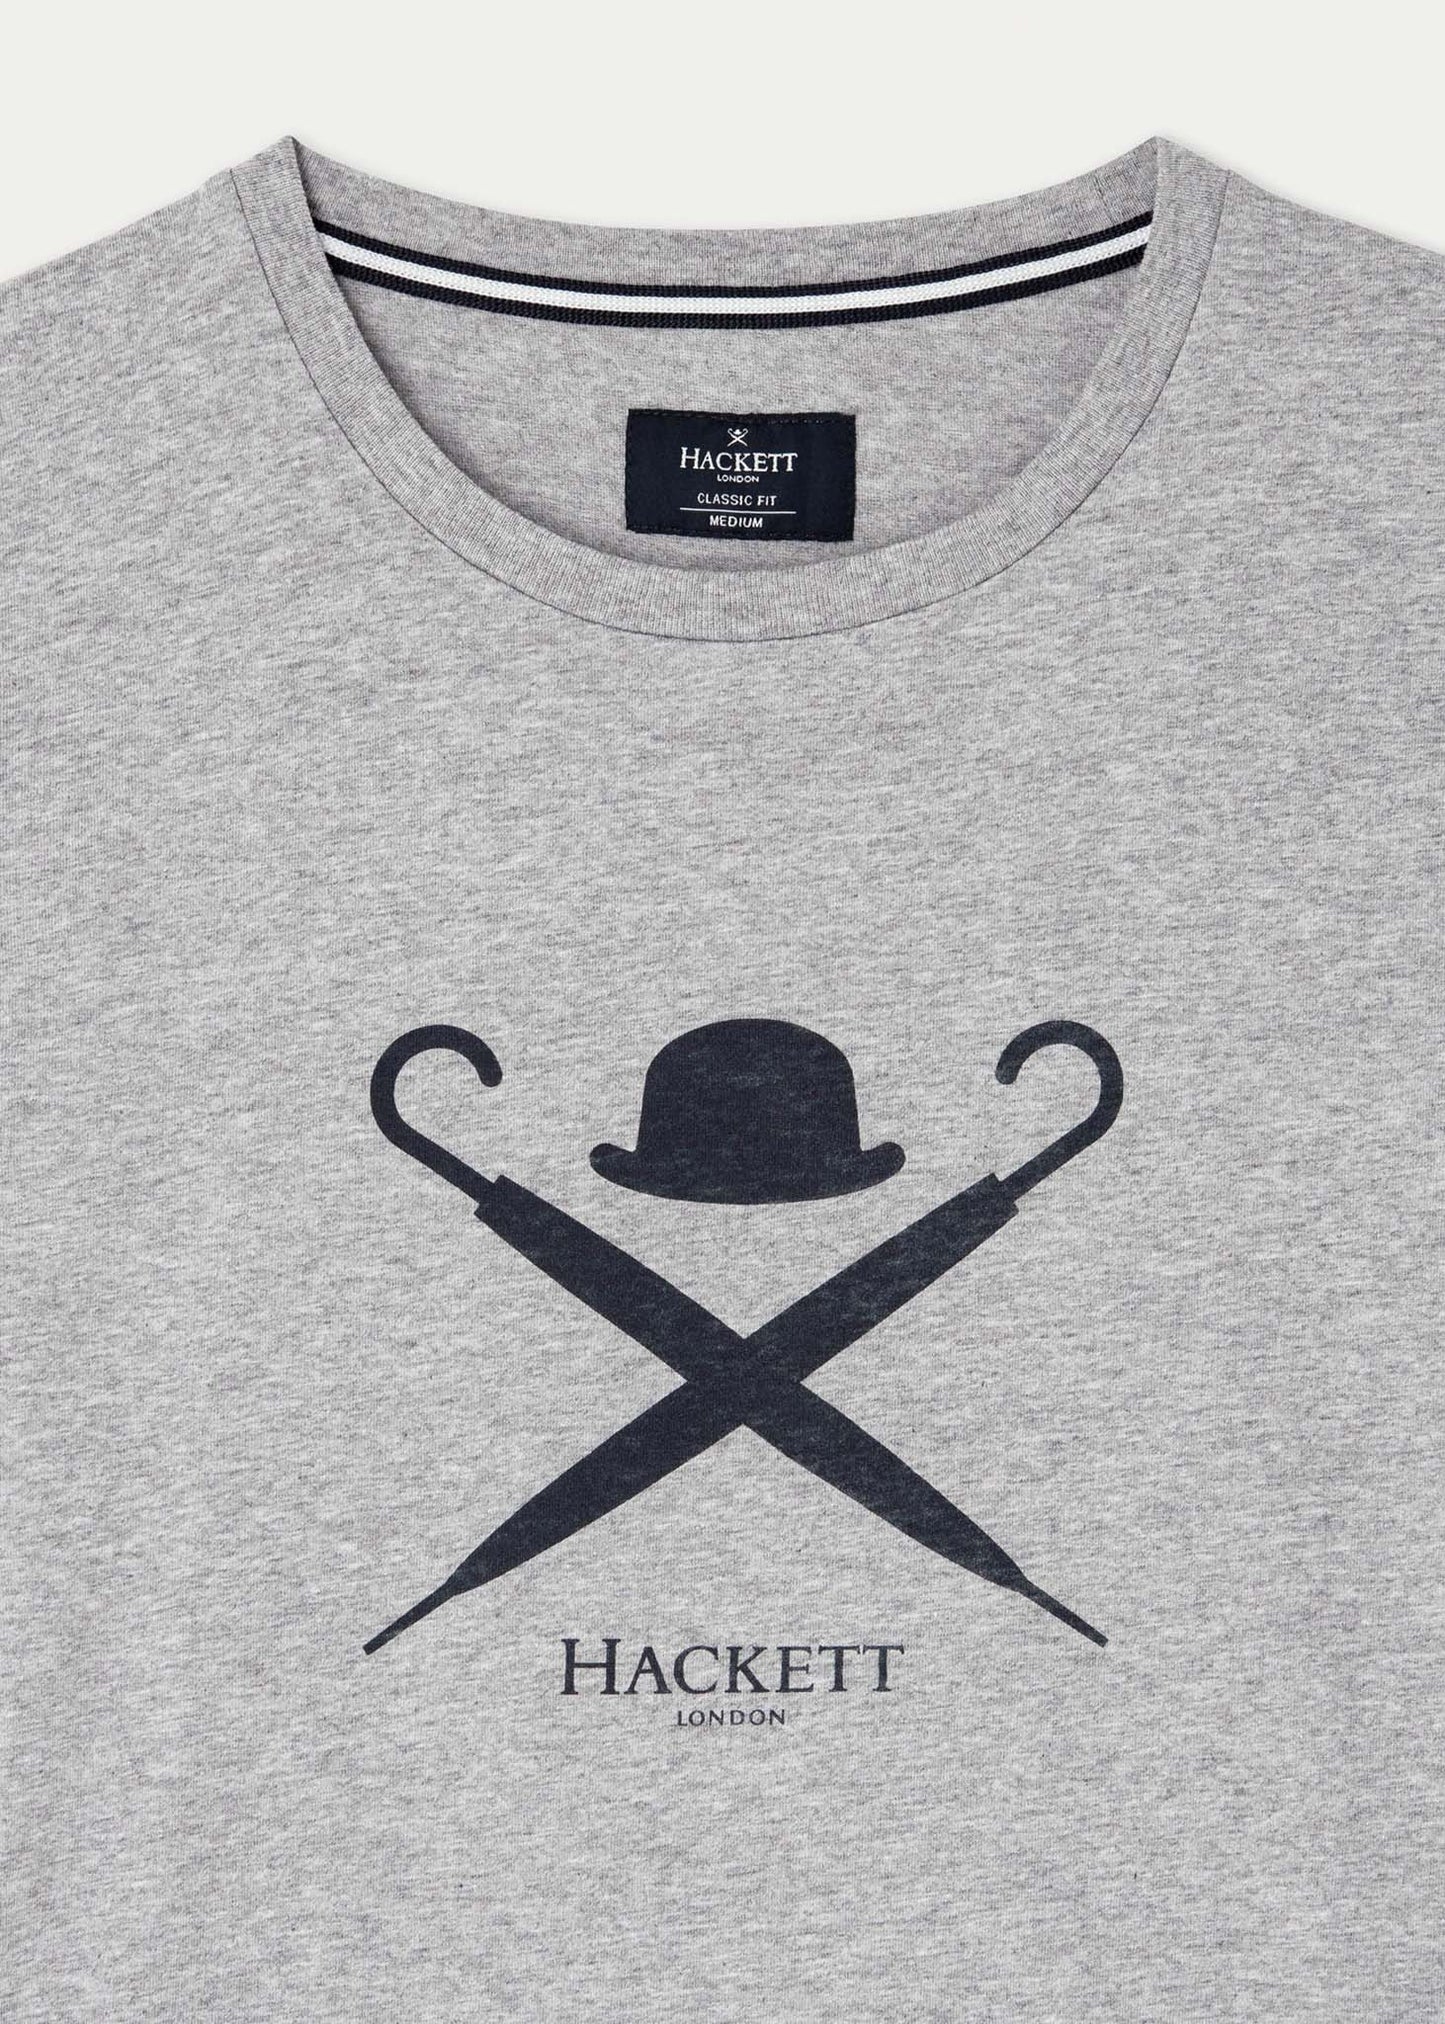 Hackett London T-shirts  Large logo t-shirt - light grey marl 